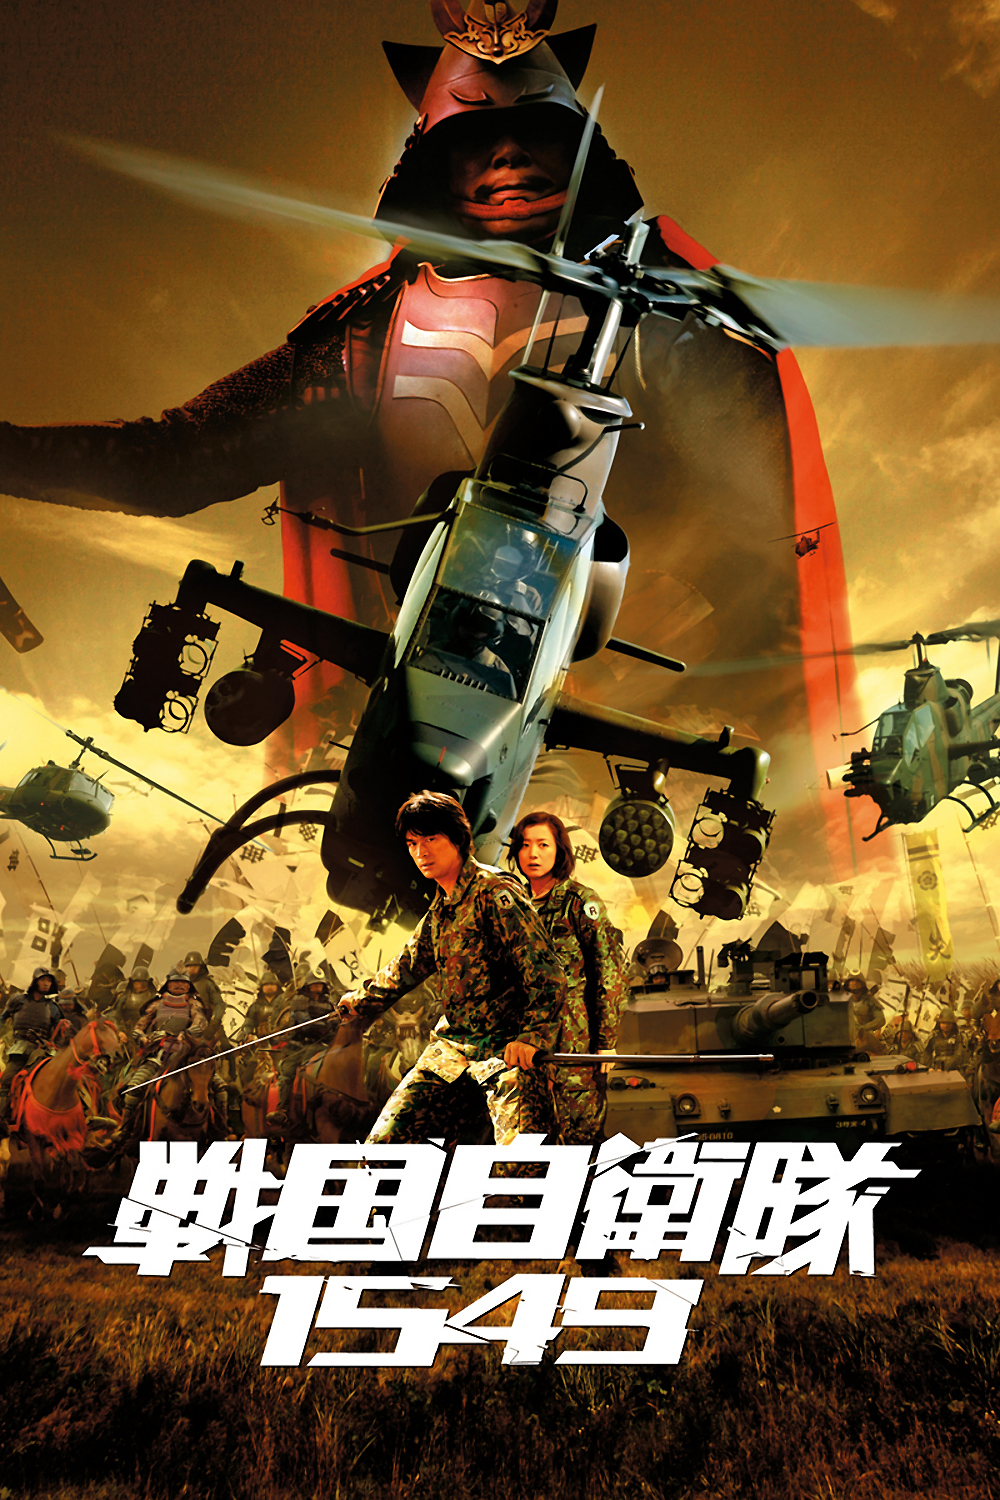 Samurai Commando Mission 1549 (2005) with English Subtitles on DVD on DVD